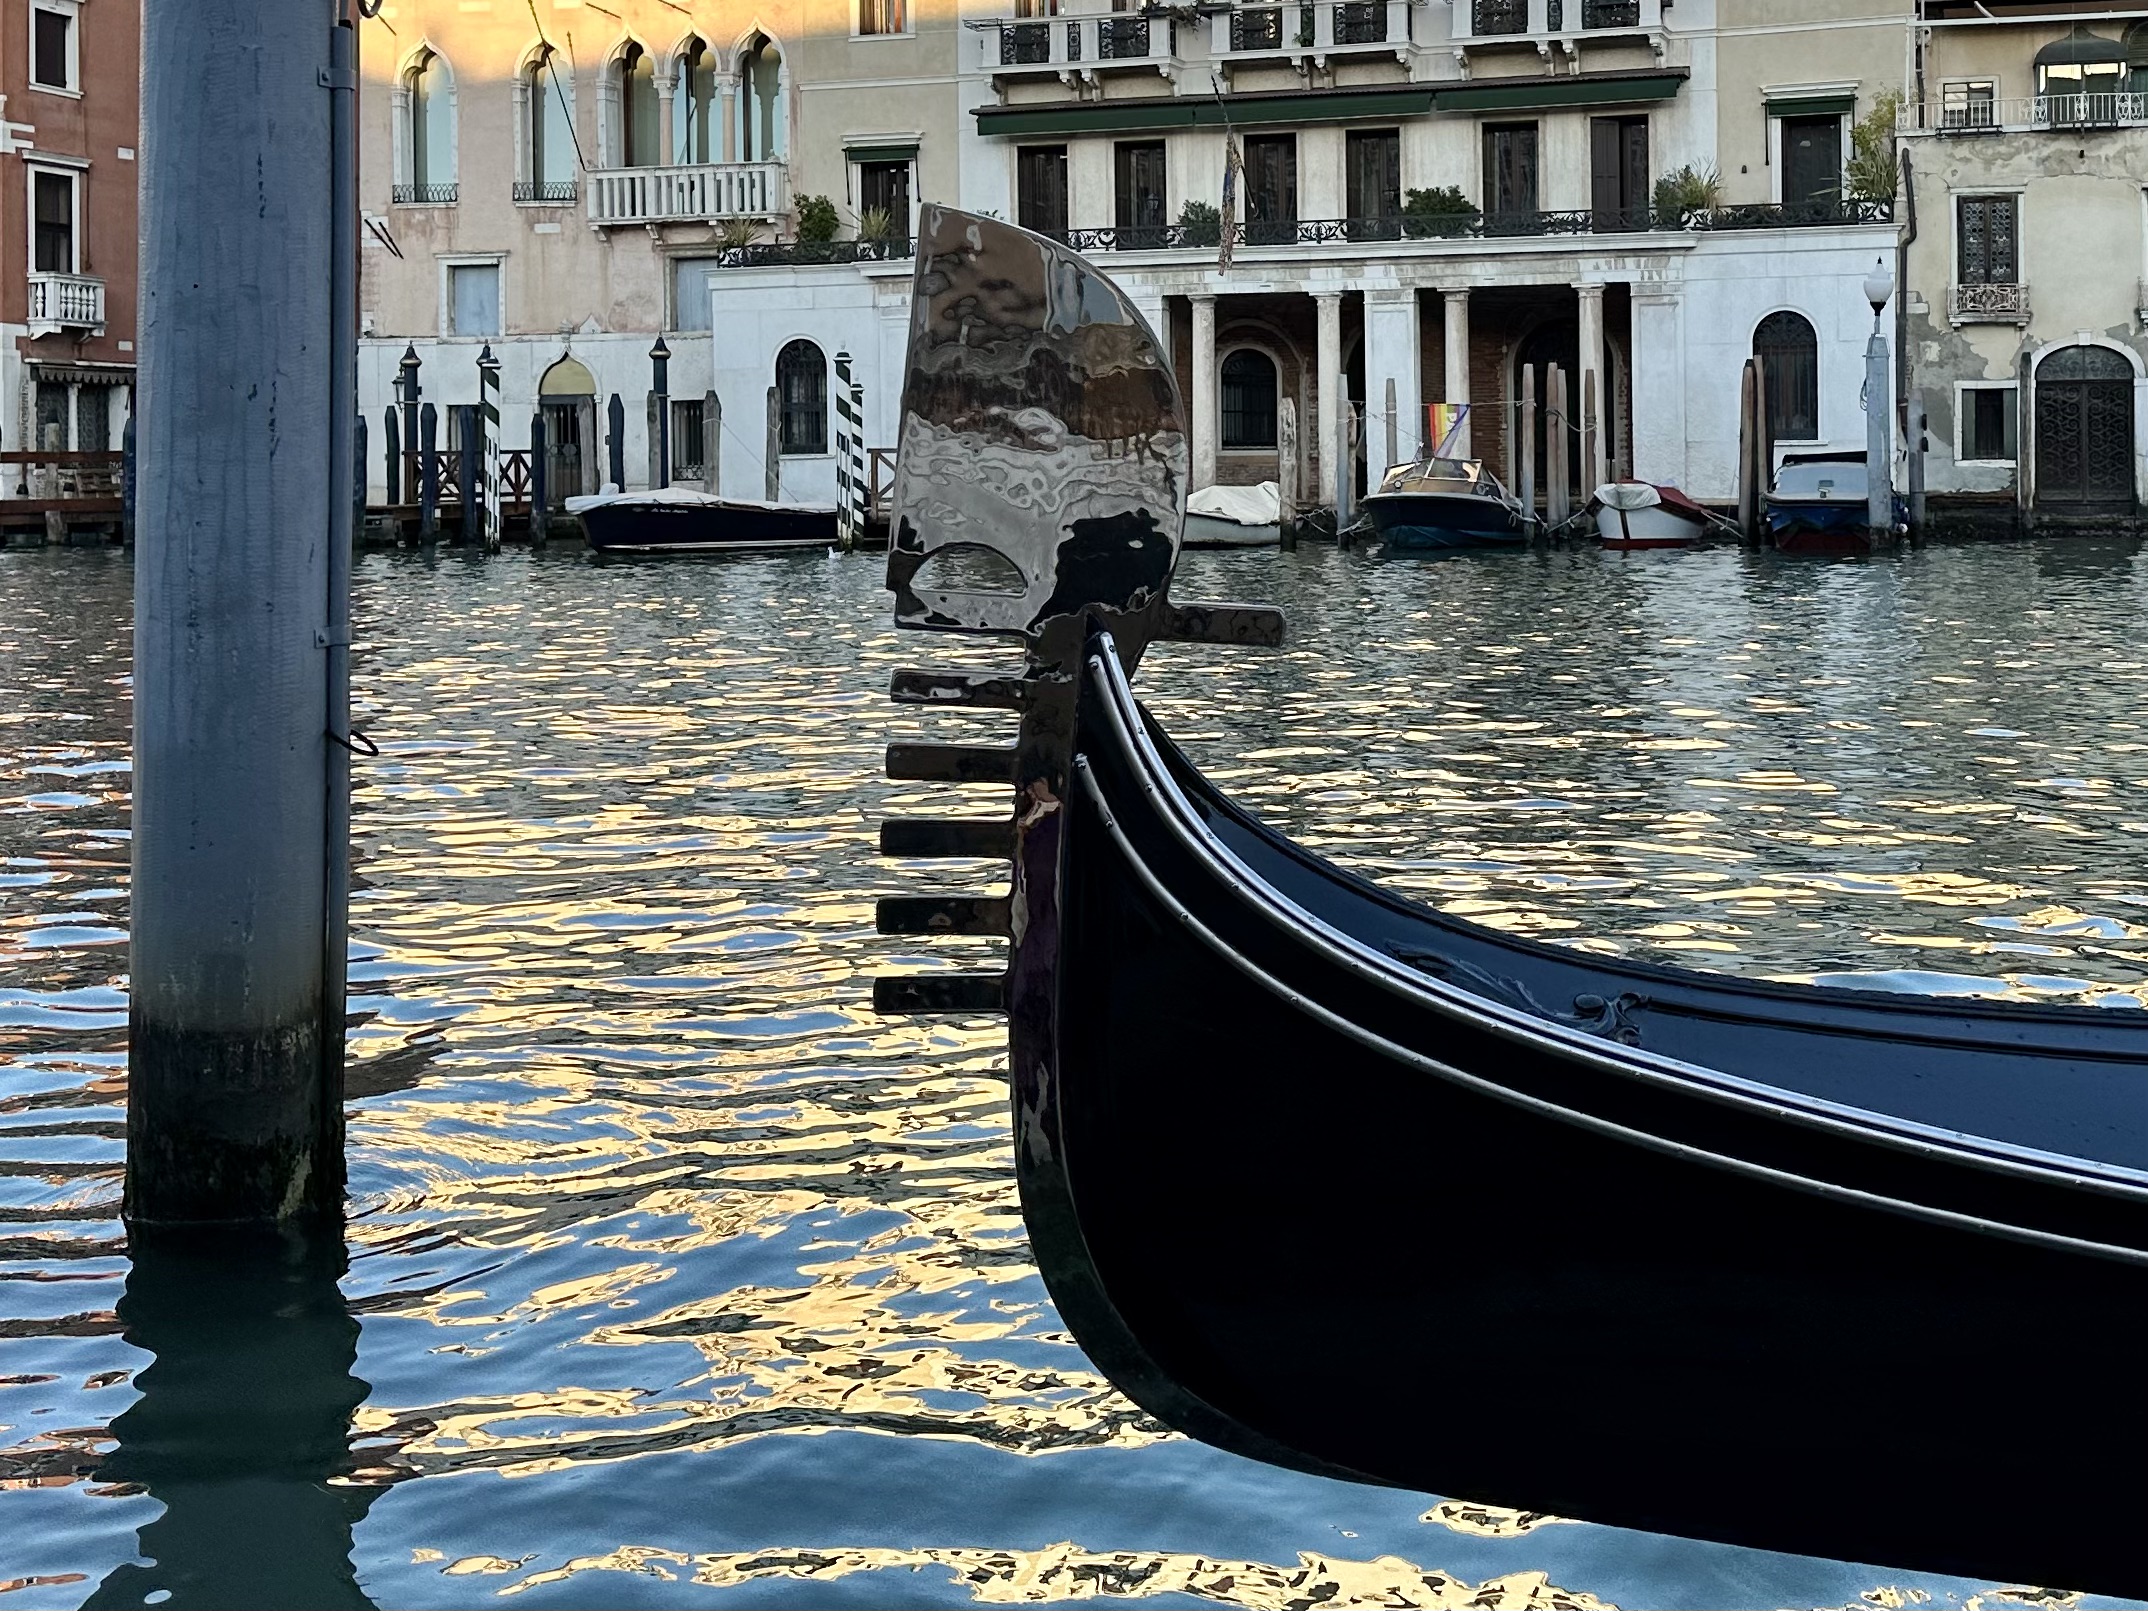 Ferro da gondola and its symbolism